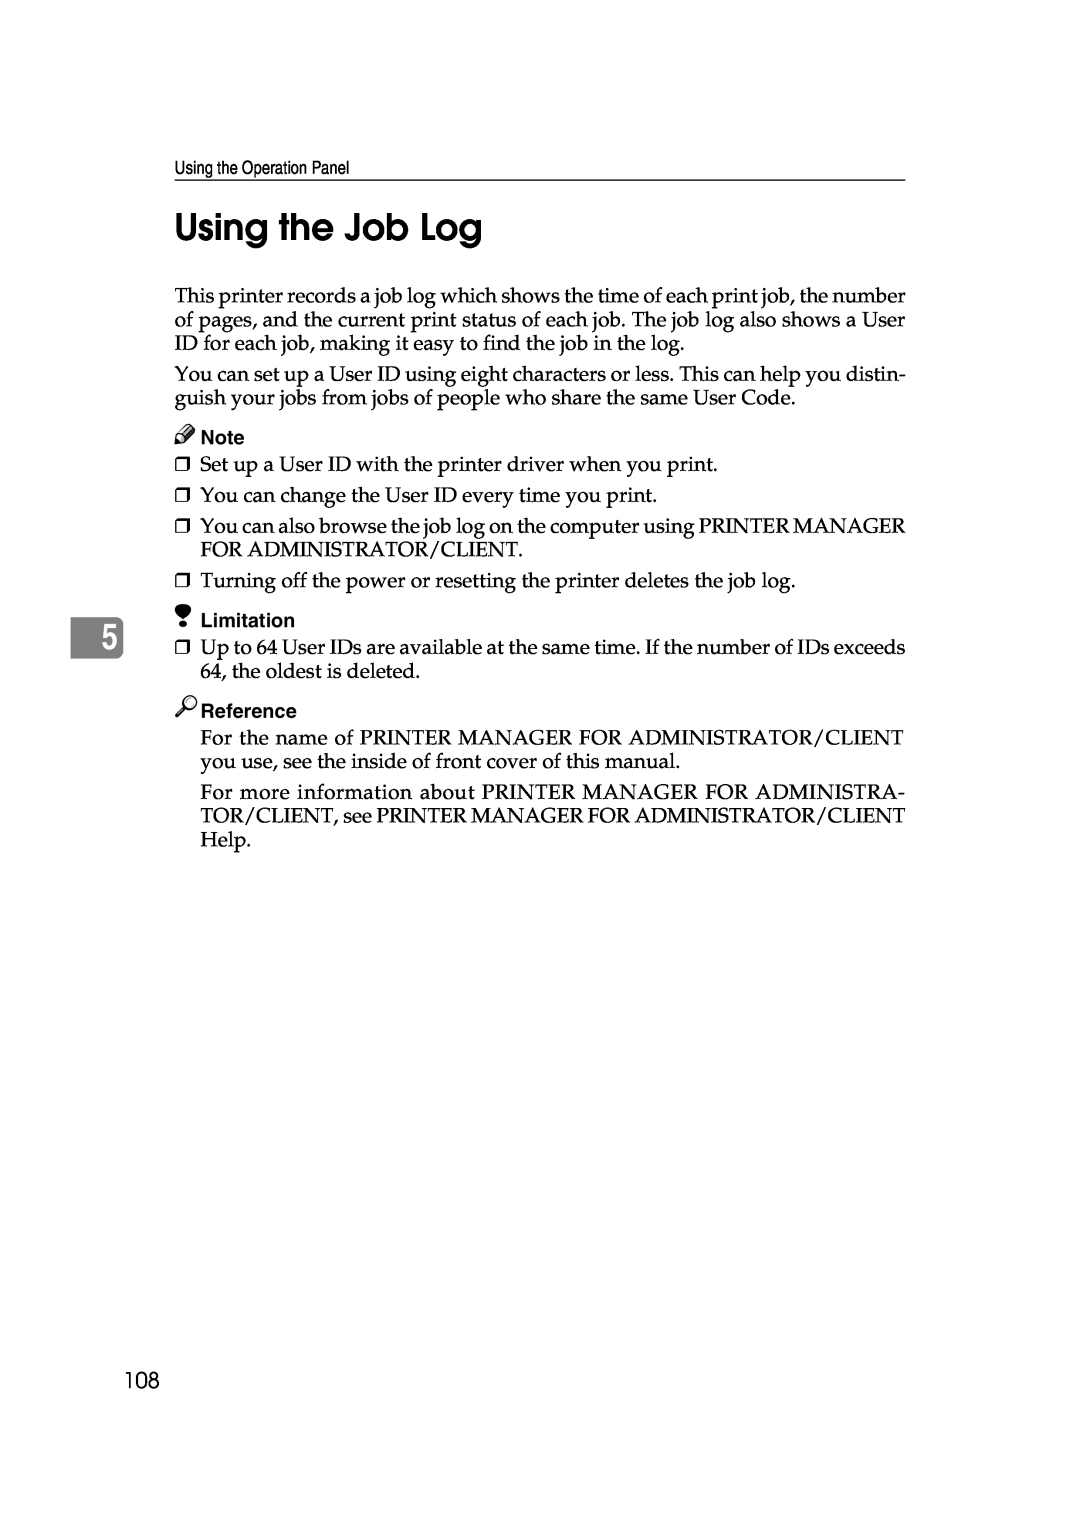 Lanier AP206 manual Using the Job Log, Limitation, Reference 